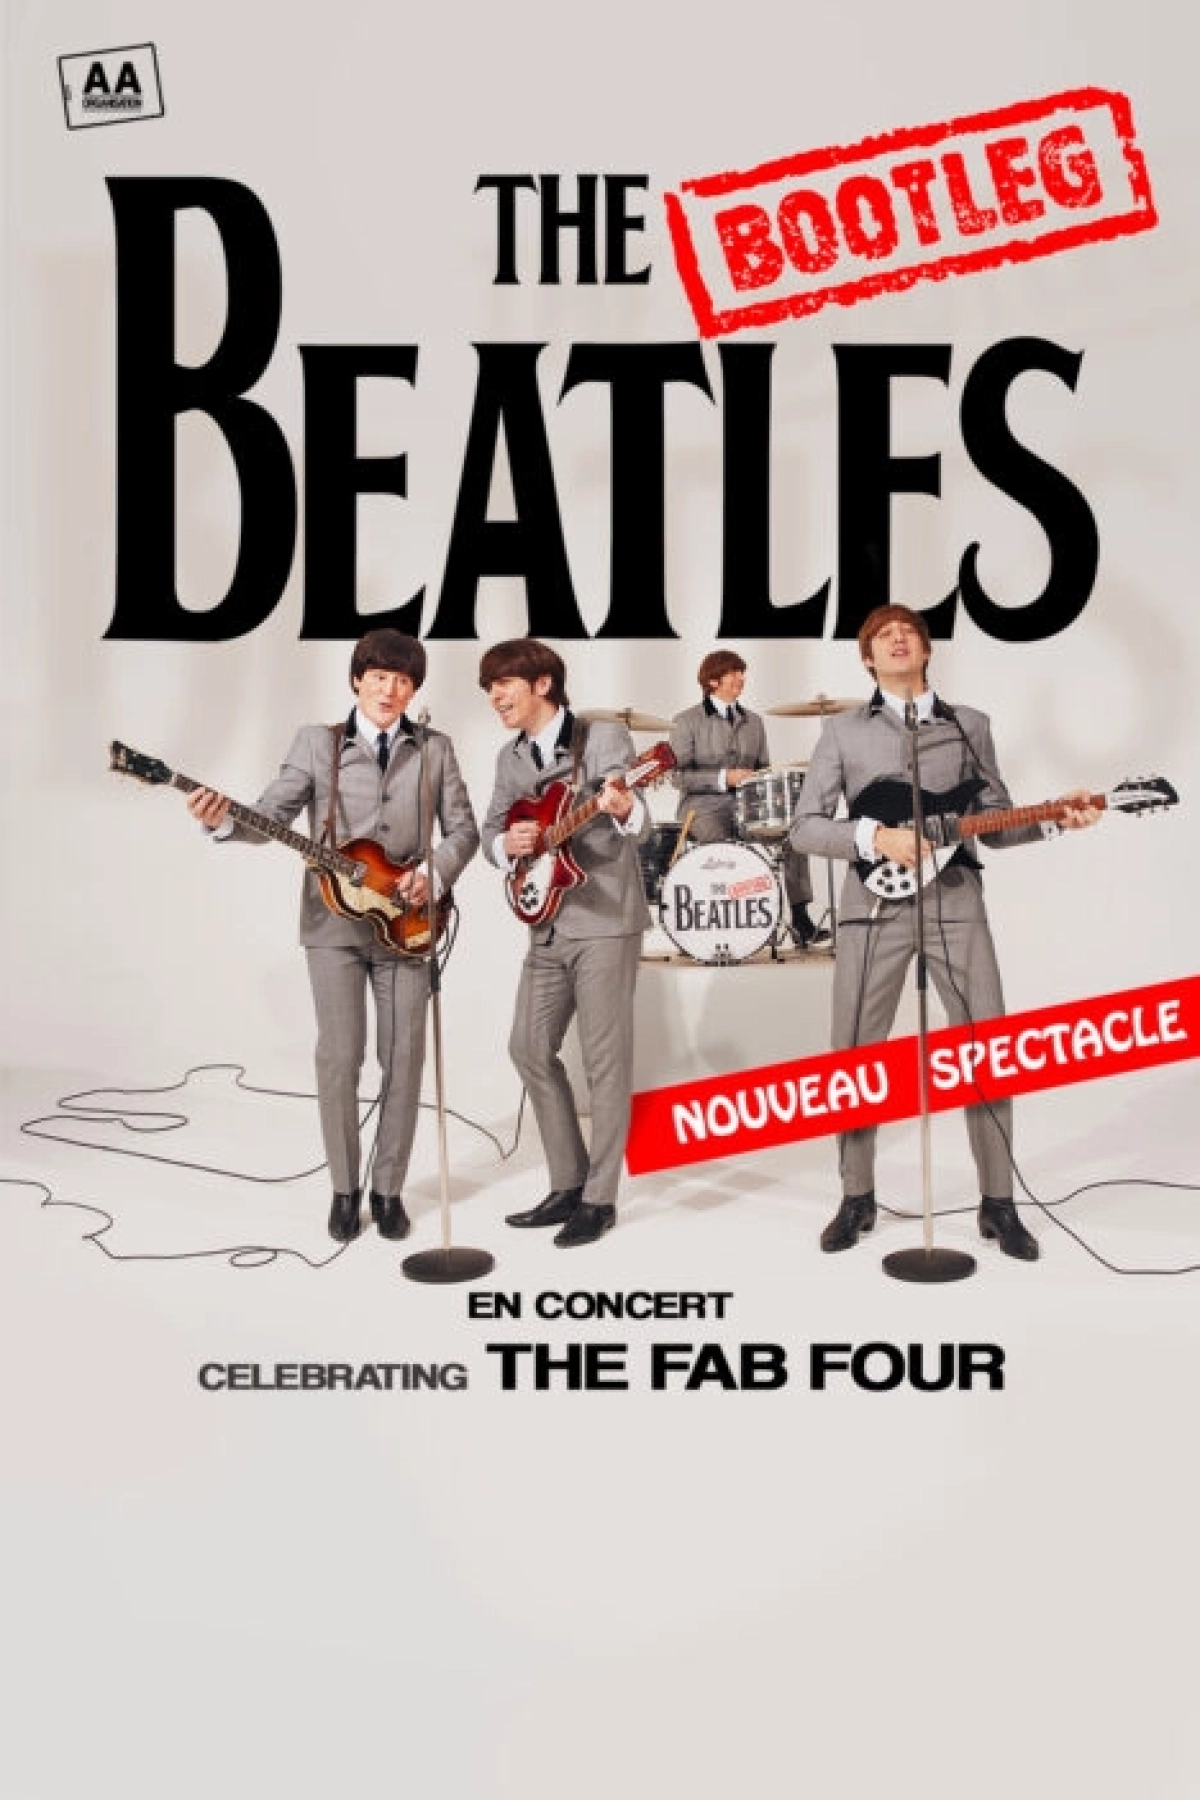 The Bootleg Beatles in der Corum Tickets